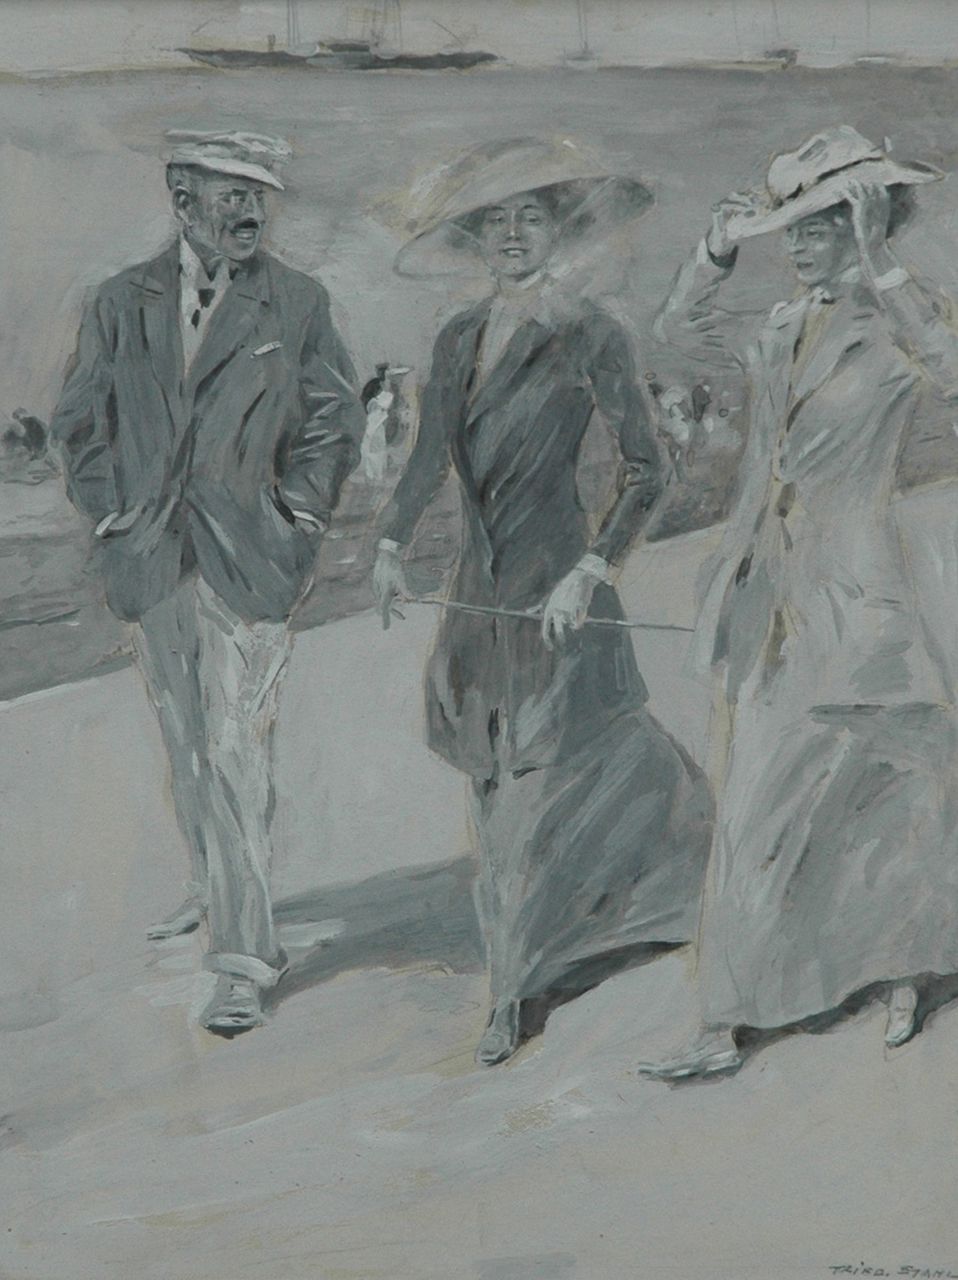 Stahl F.  | Friedrich Stahl, Wandelen op de boulevard, gouache op karton 18,0 x 23,5 cm, gesigneerd rechtsonder